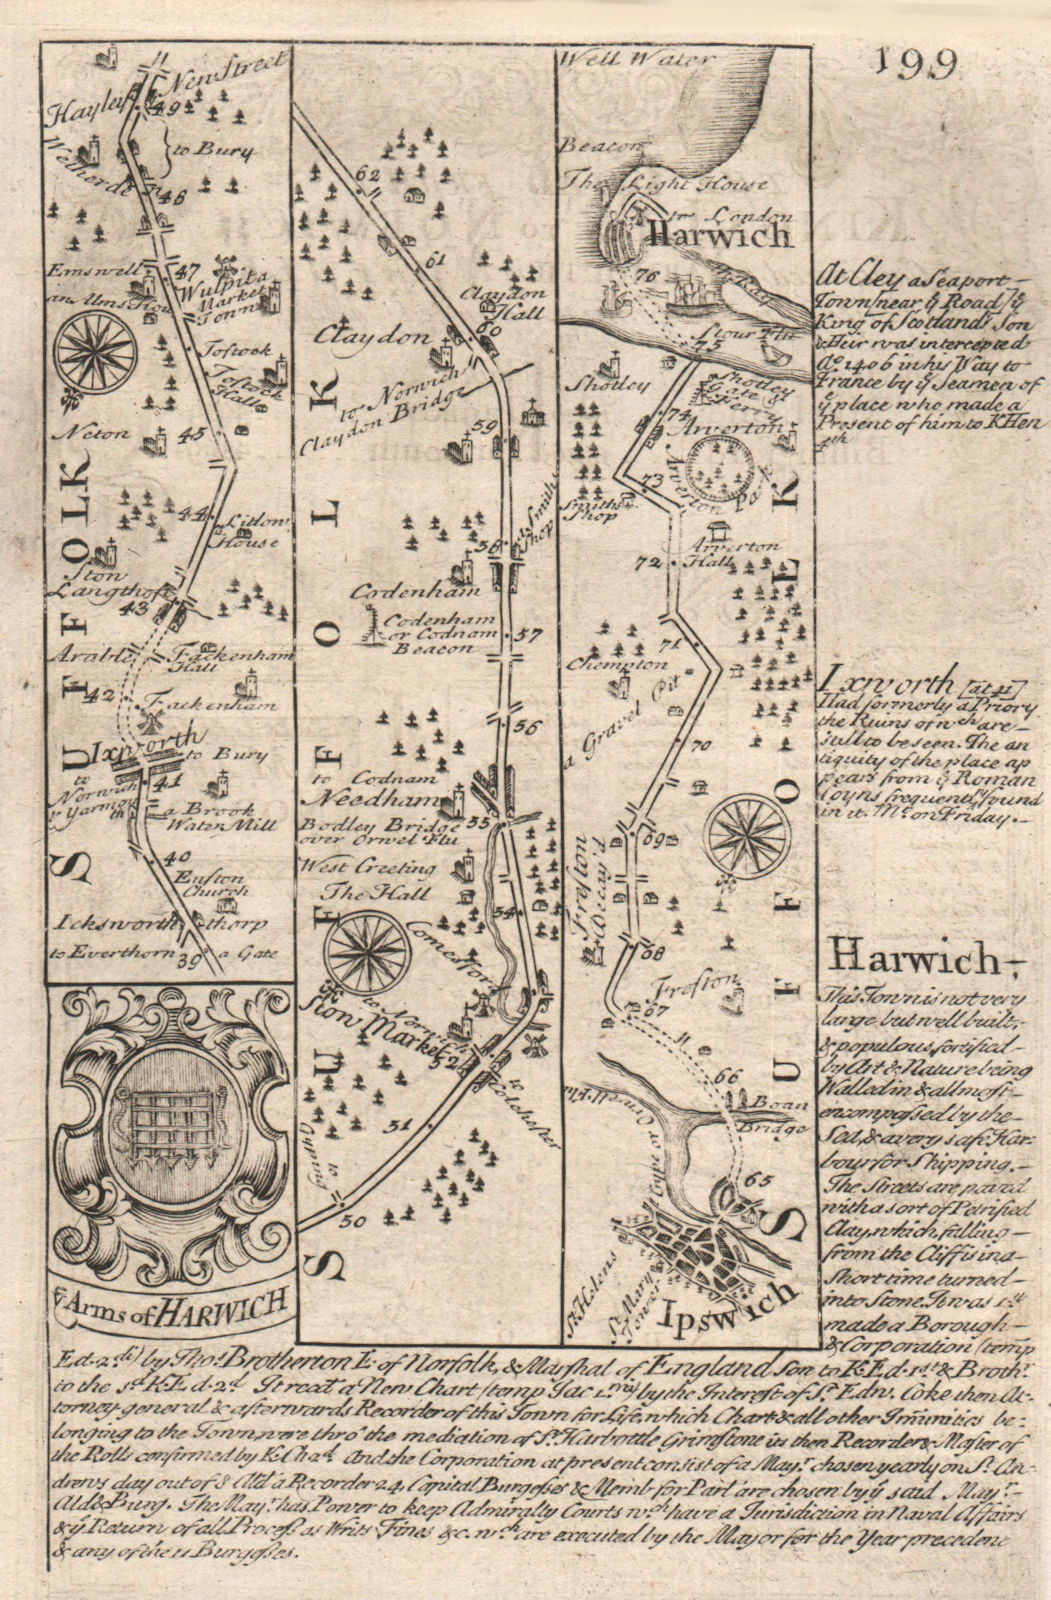 Ixworth-Stowmarket-Claydon-Ipswich-Harwich road map by OWEN & BOWEN 1753